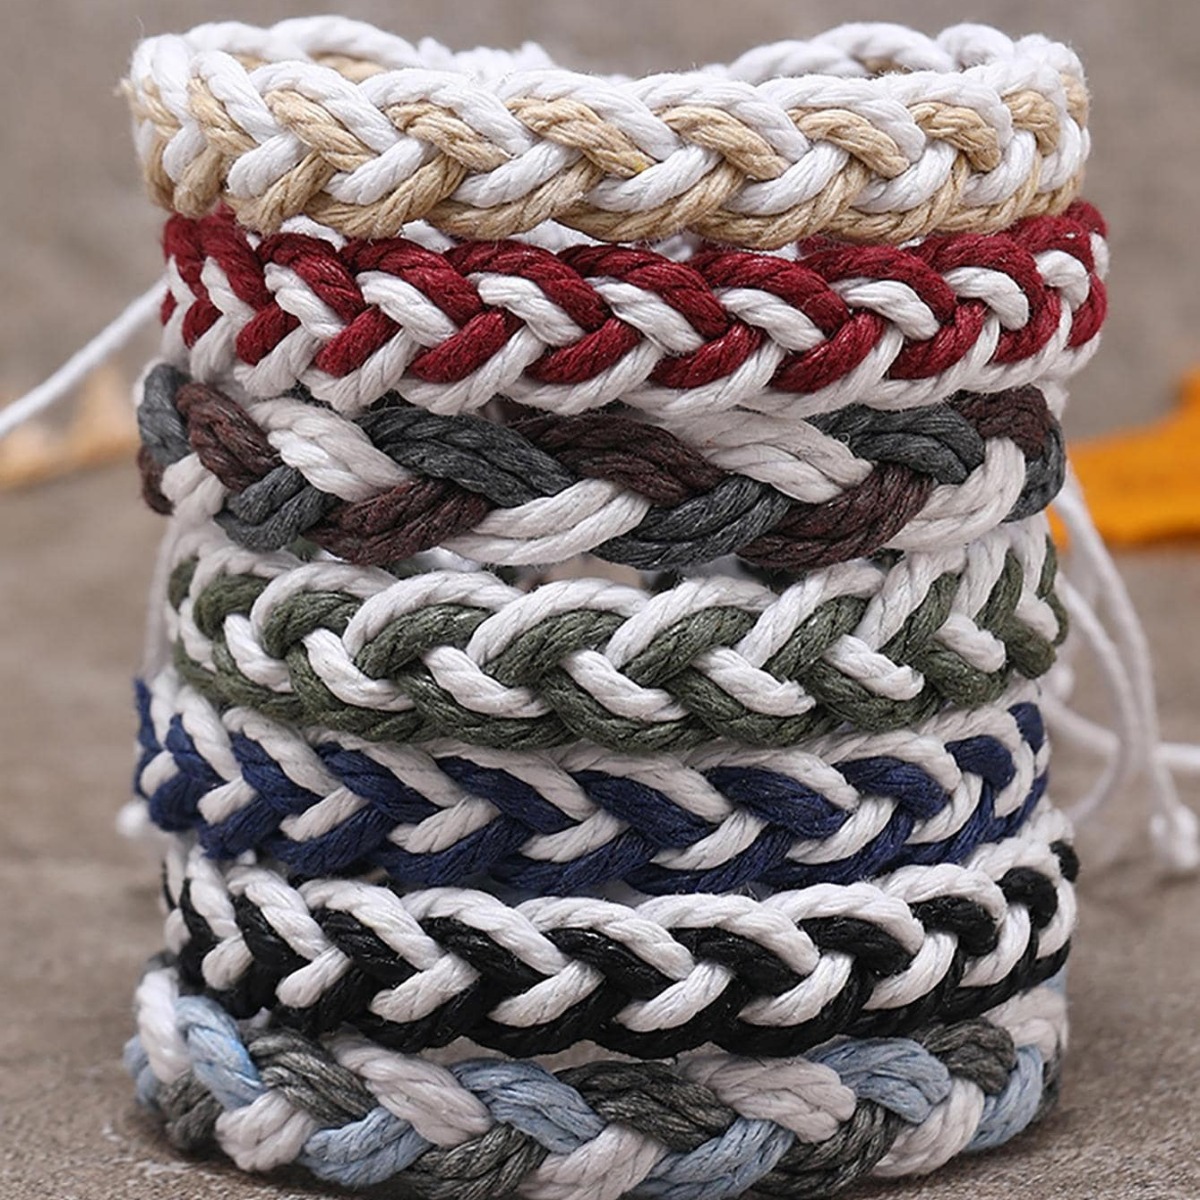 7PCS/9PCS Boho Colorful Cotton Rope Woven Bracelets, Men's Women's  Bracelets For Daily Wear Good Hand Rope Gifts.